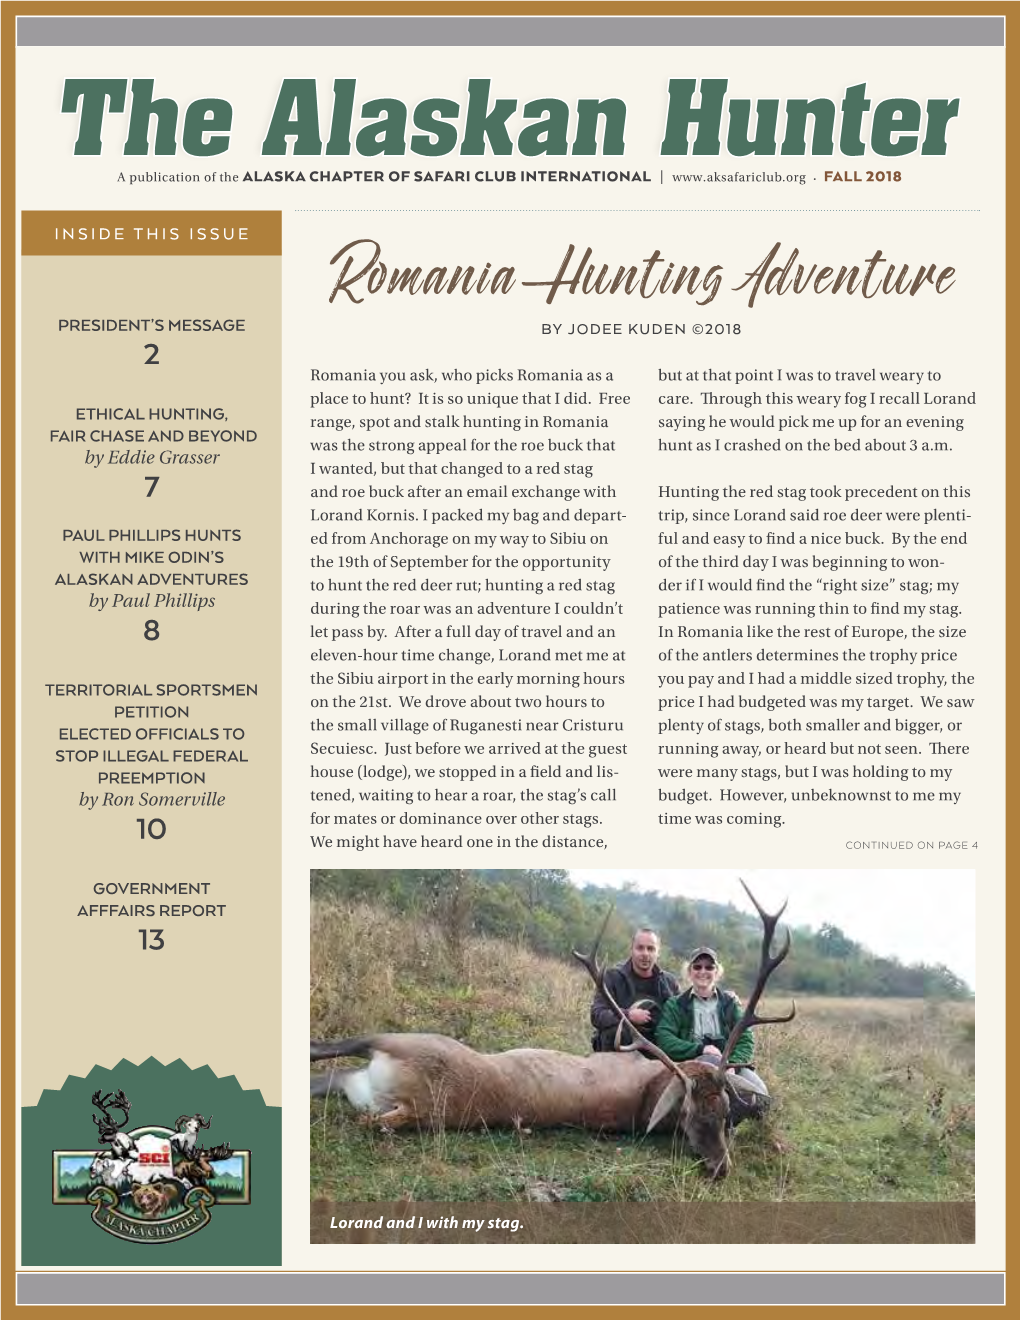 Romania Hunting Adventure